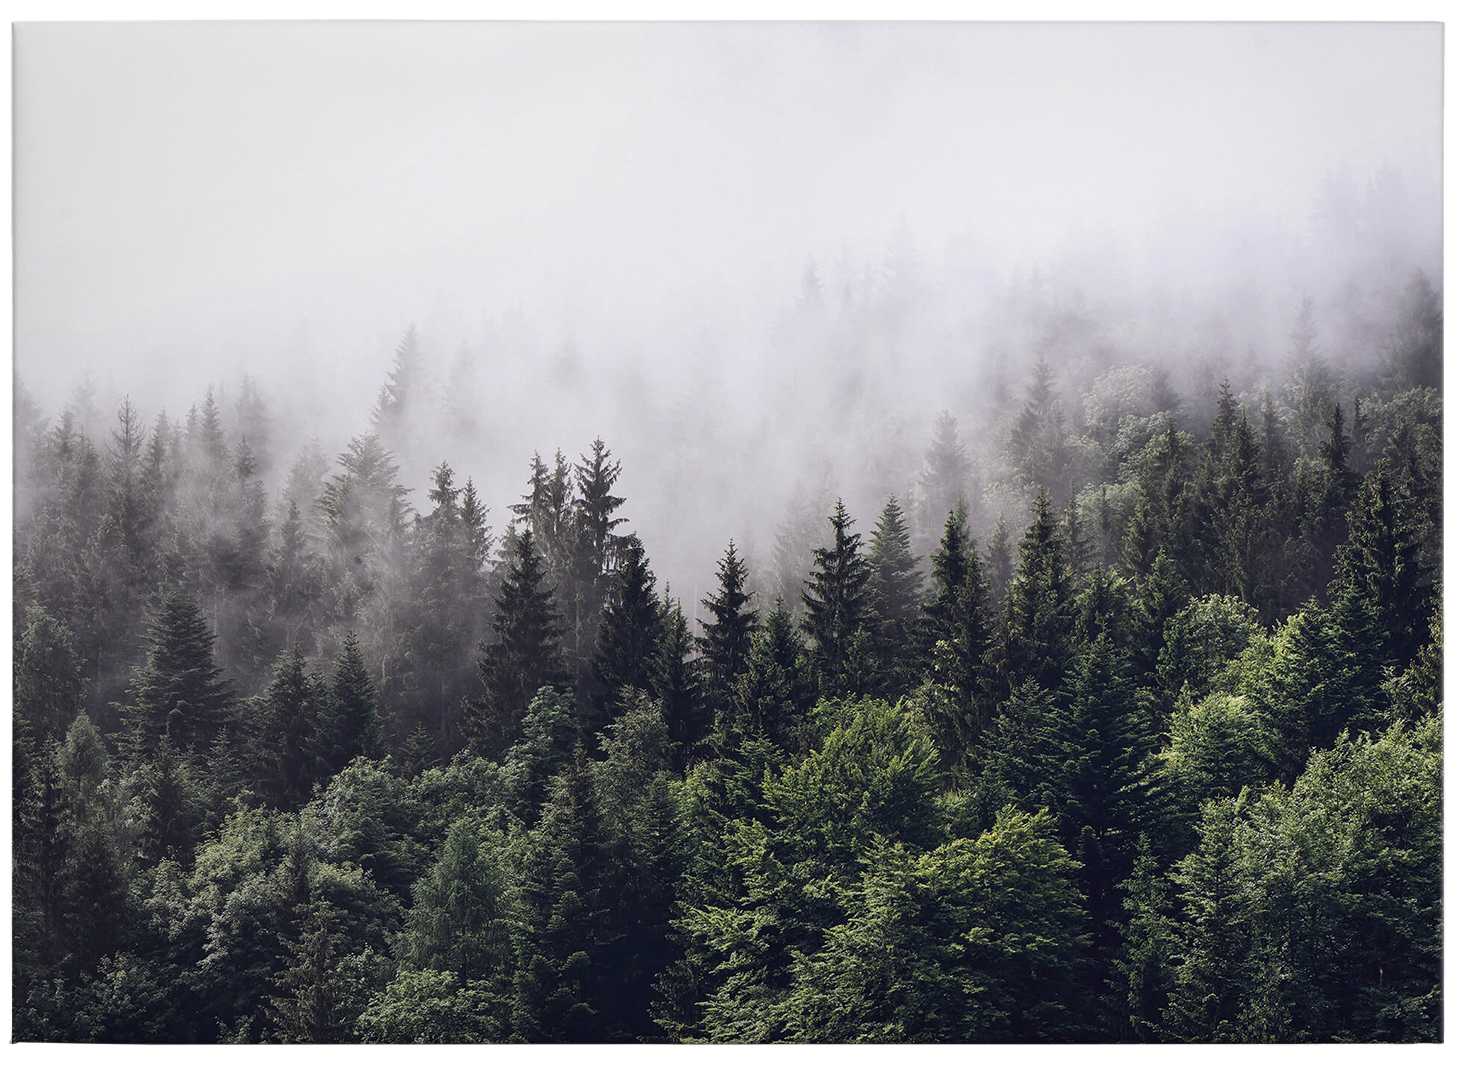             Leinwandbild Wald im Morgennebel – 0,70 m x 0,50 m
        